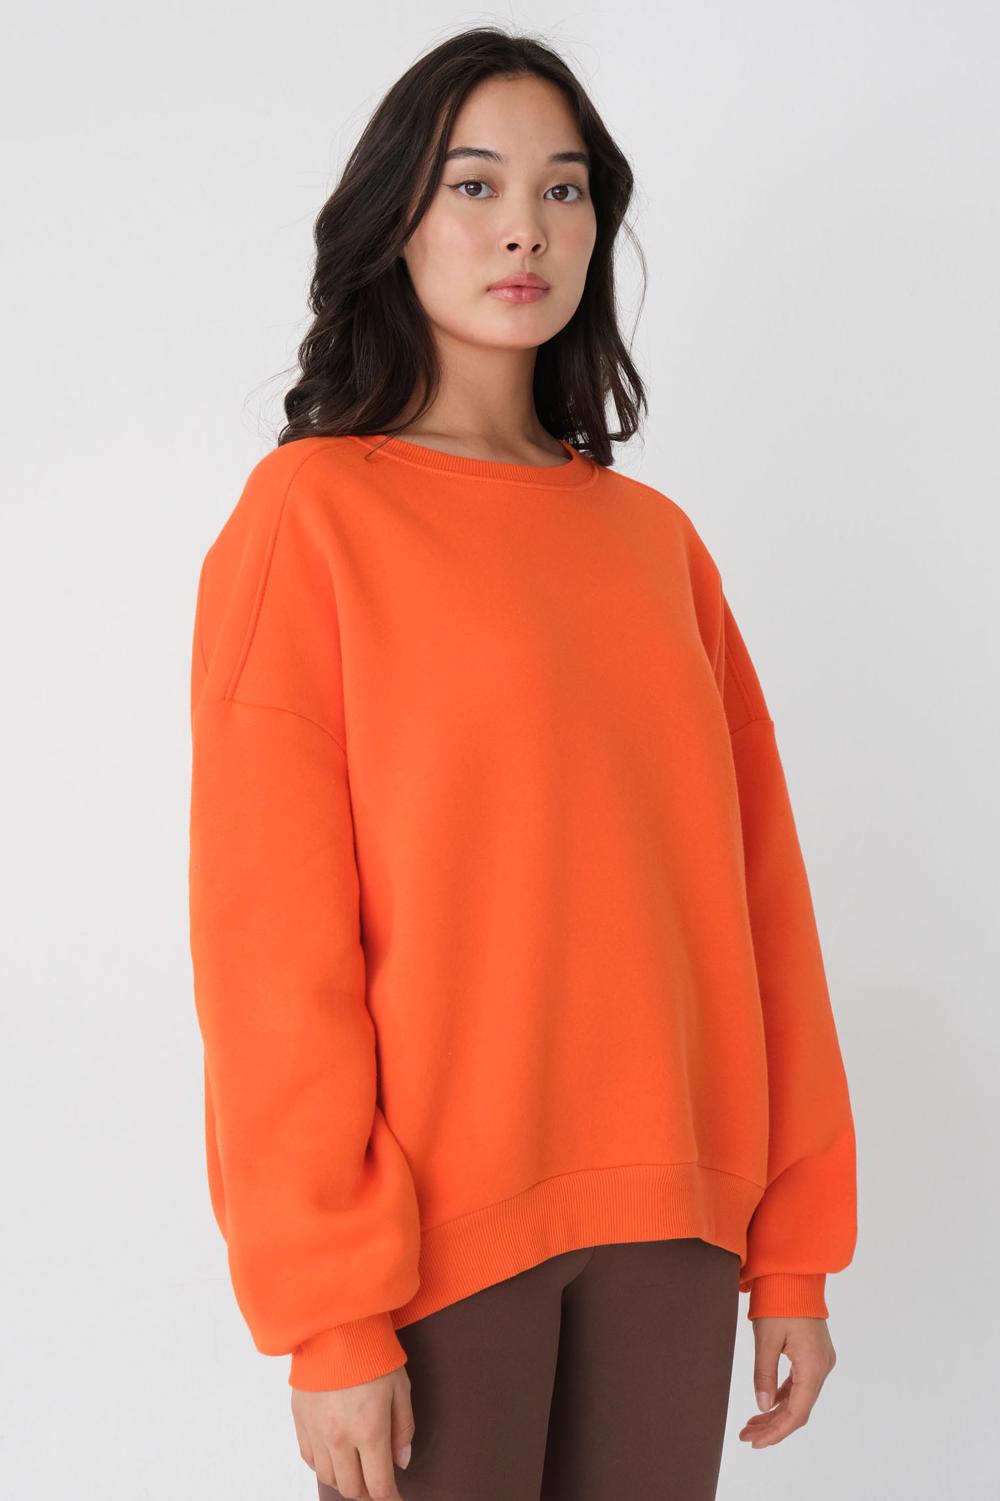 WOMEN FASHION Jumpers & Sweatshirts Jumper Basic Nais jumper Orange M discount 72% 